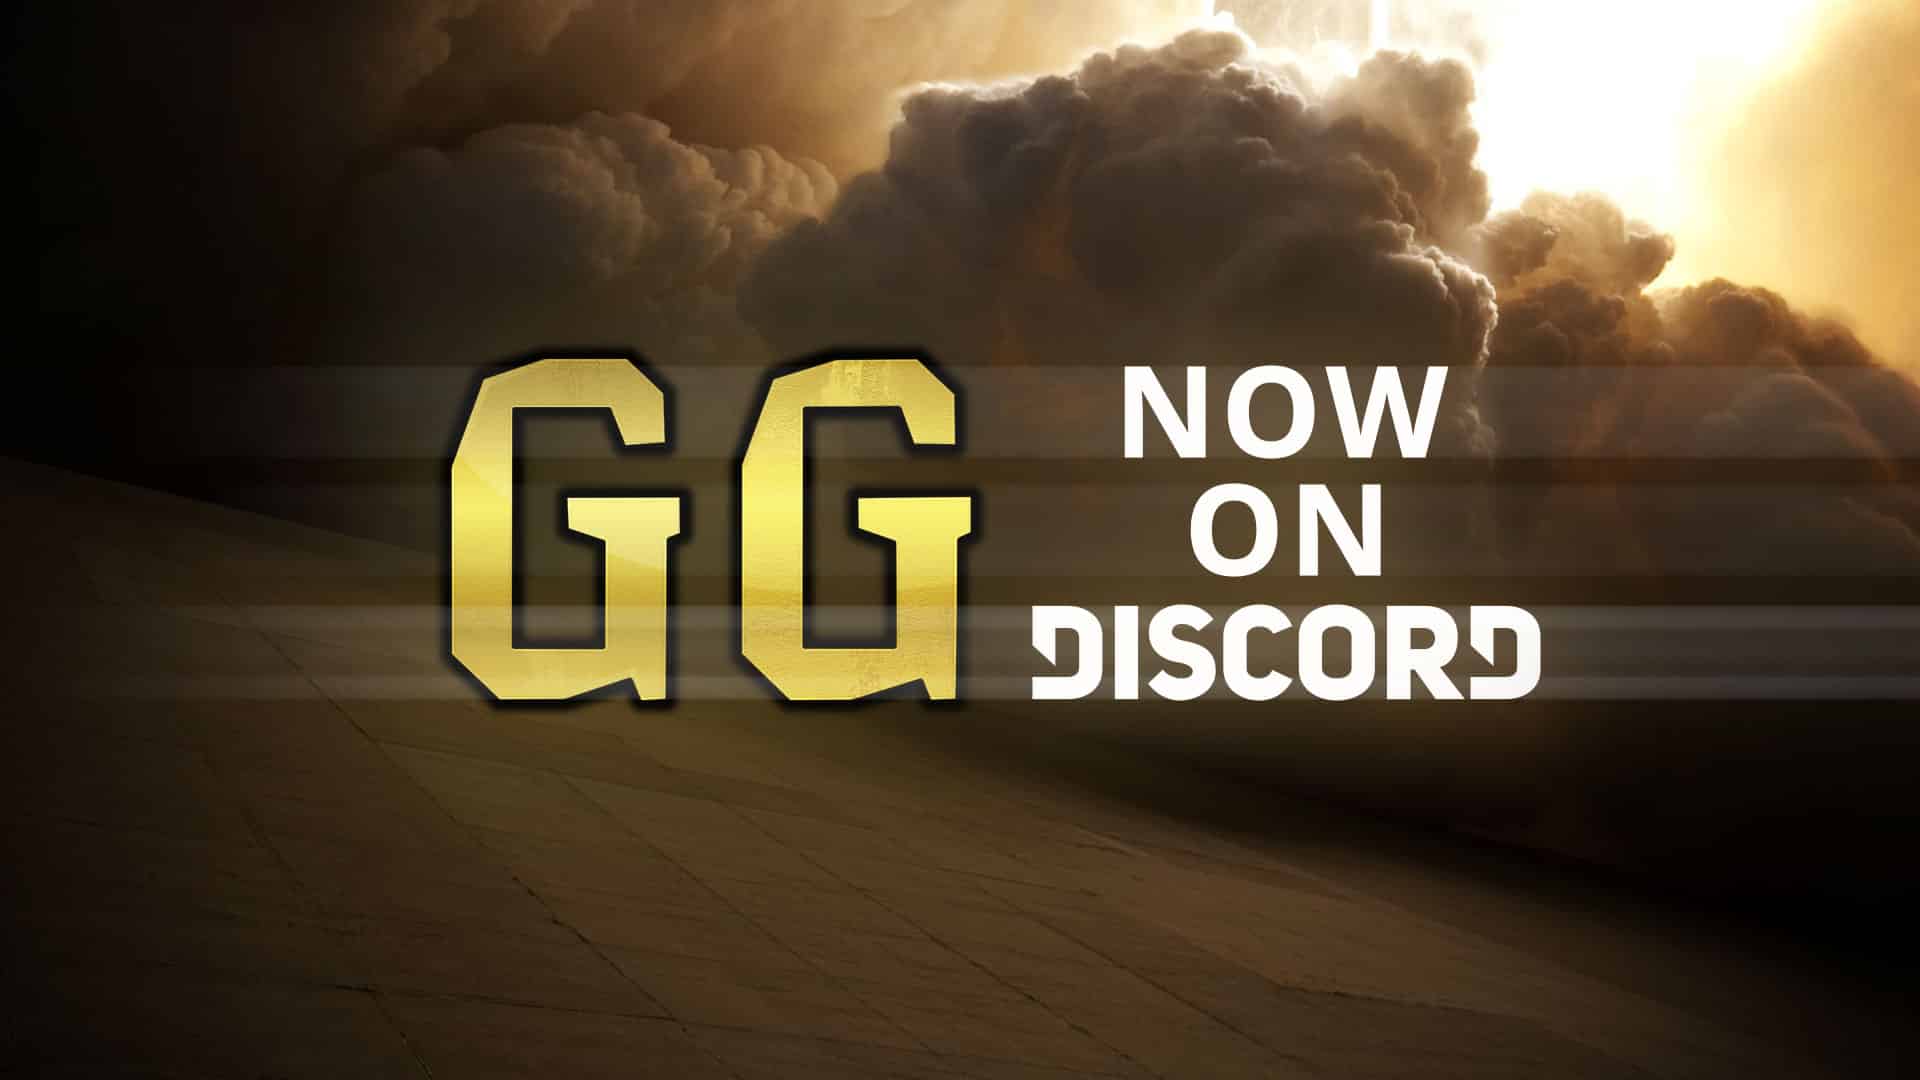 GG on discord